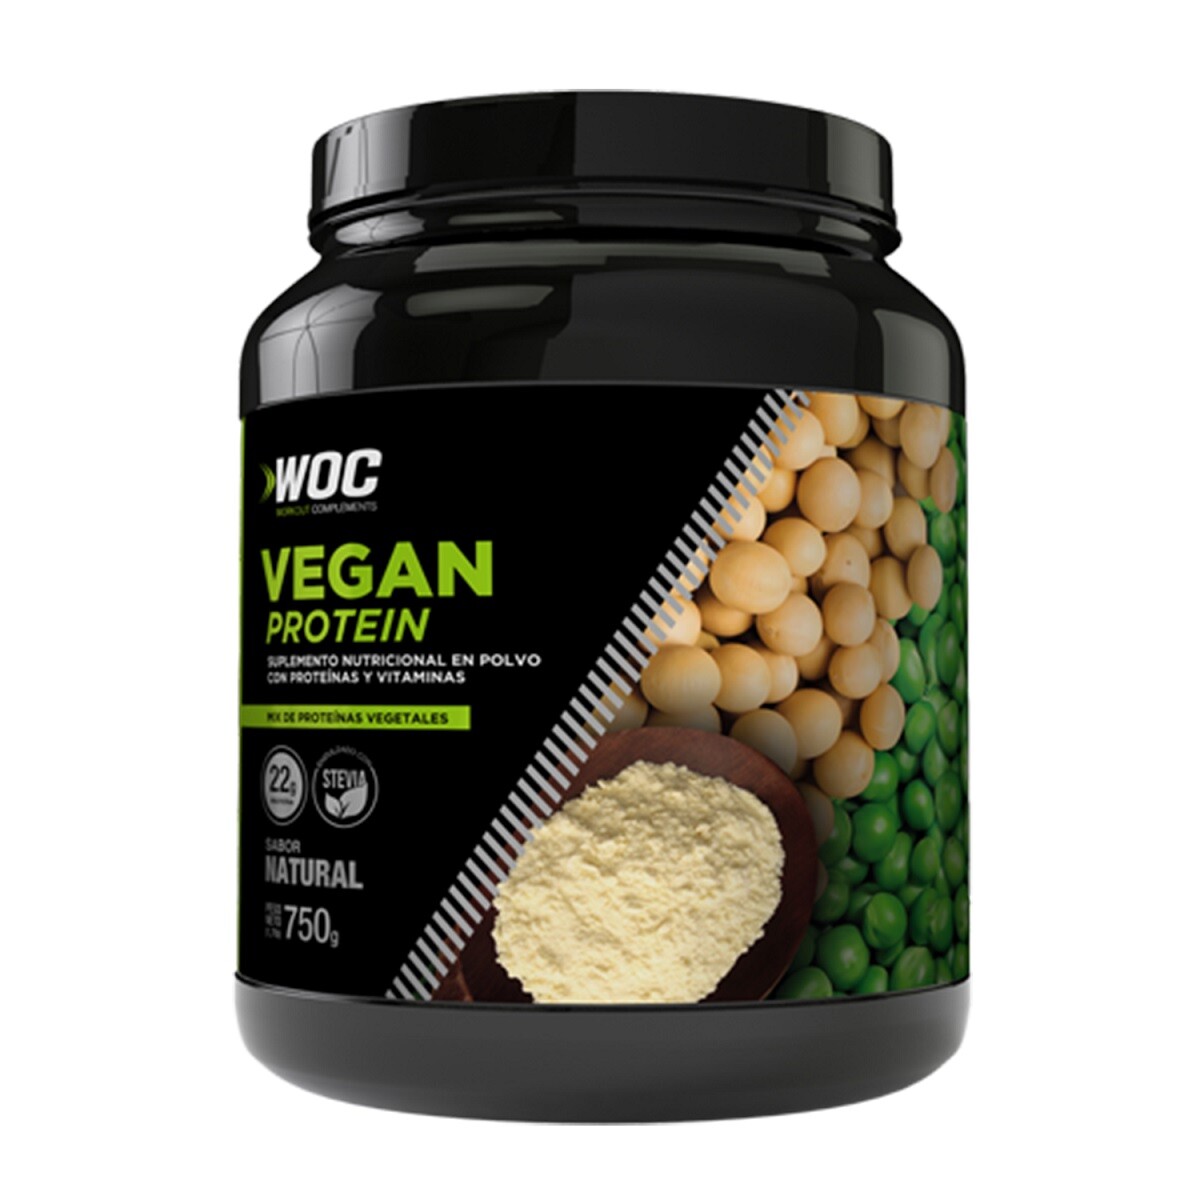 Vegan Protein Woc Natural 750 Grs. 